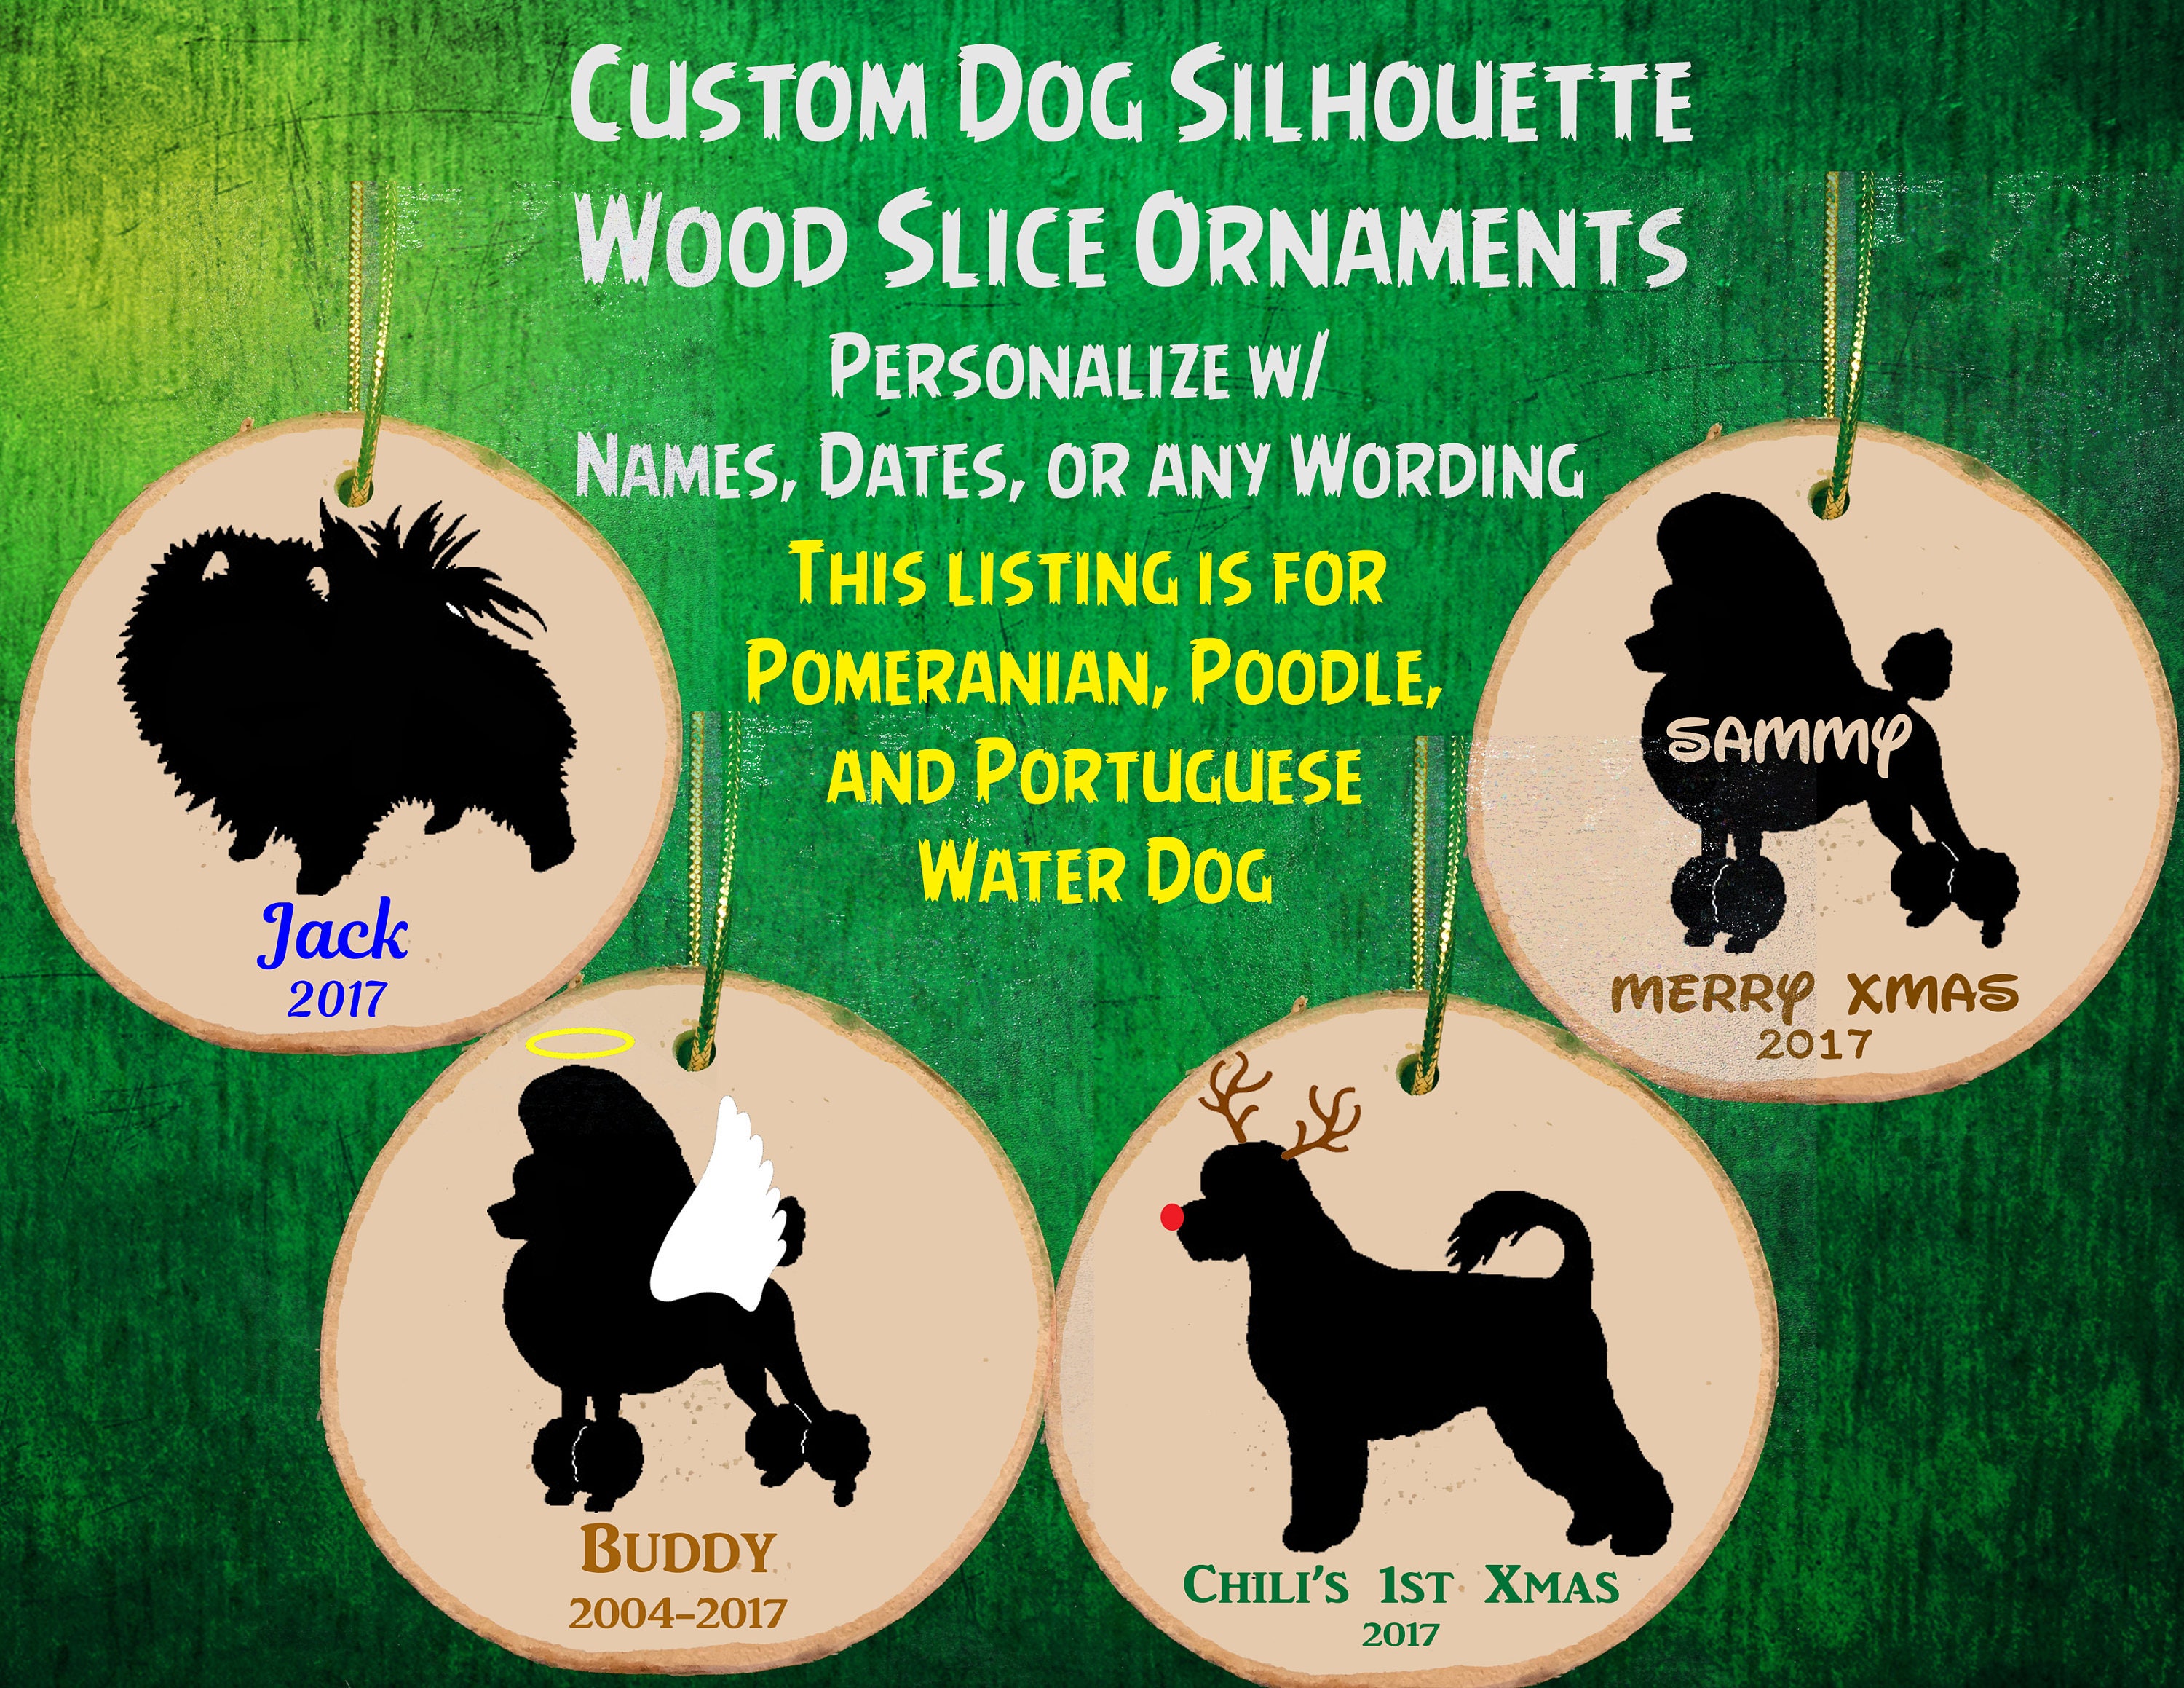 Custom Personalized Dog Wood Slice Ornament / Angel / Reindeer | Etsy